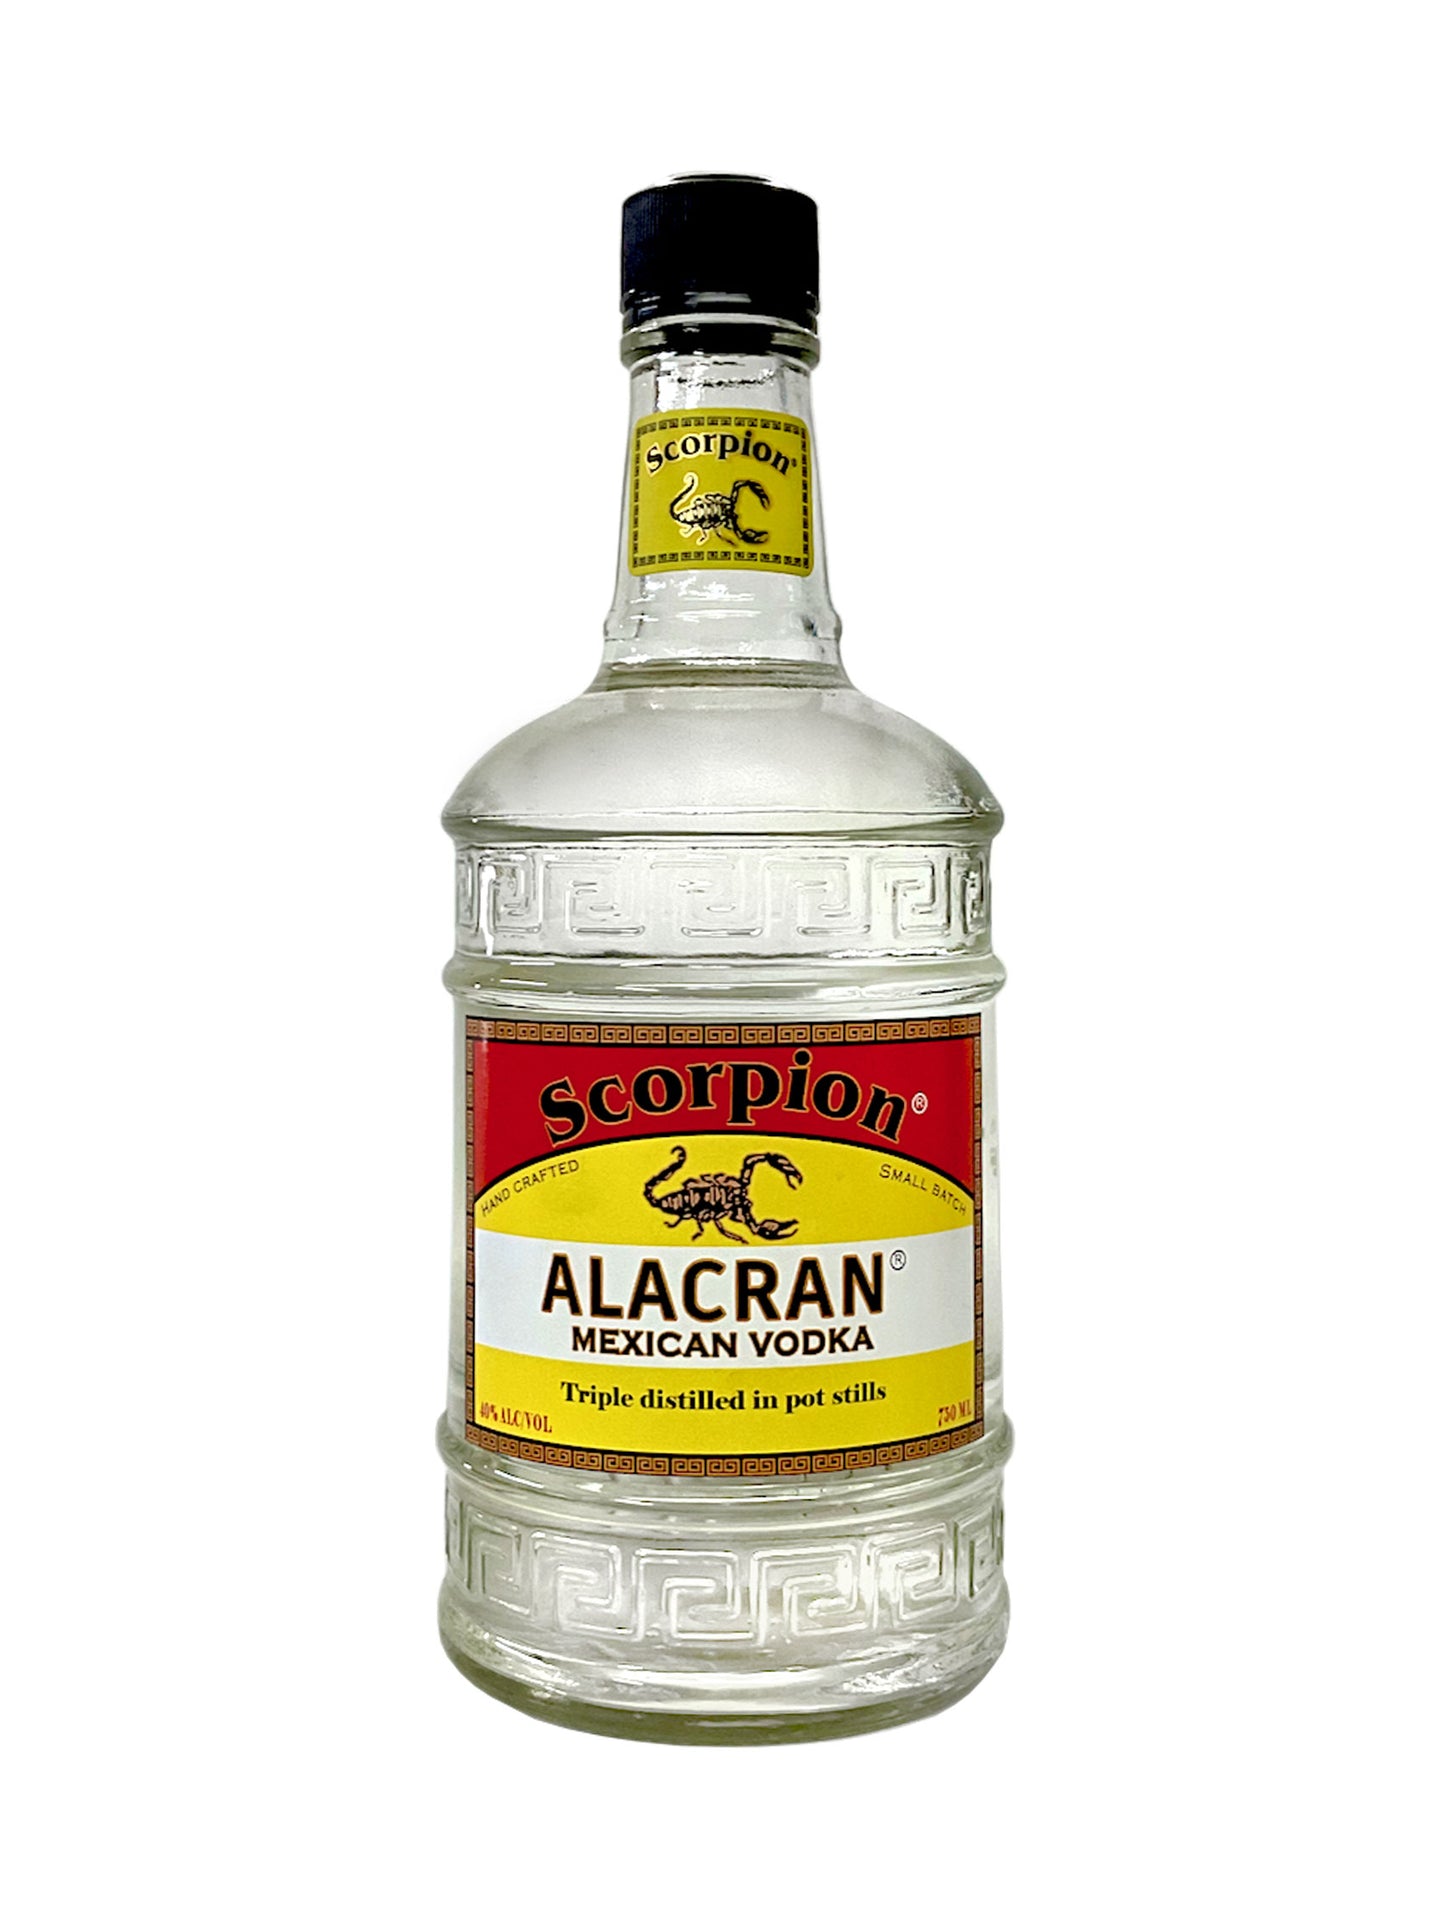 Scorpion ALACRAN Vodka 750mL